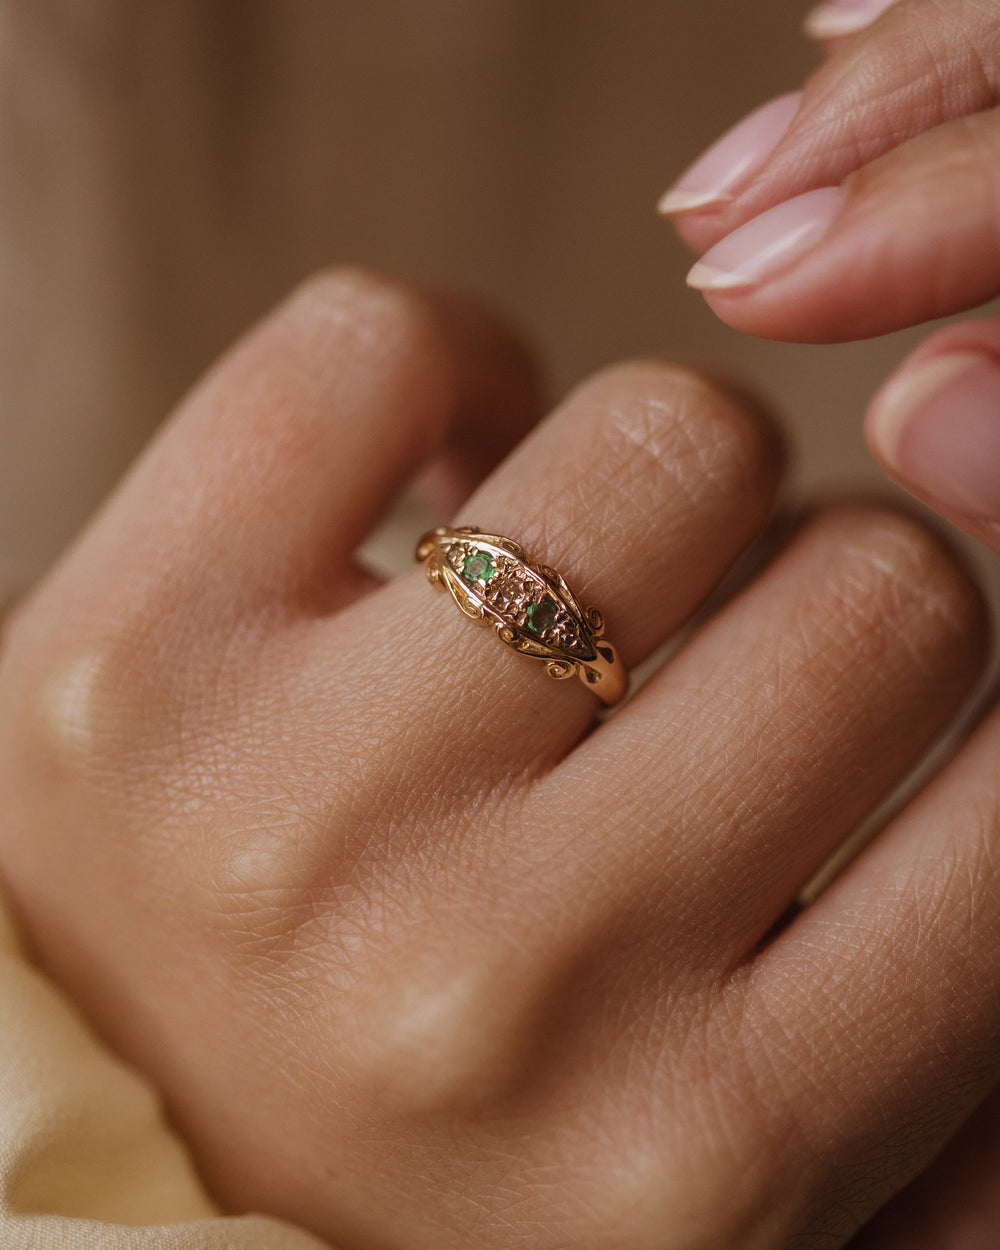 Hazel 1979 Vintage 9ct Gold Emerald & Diamond Ring